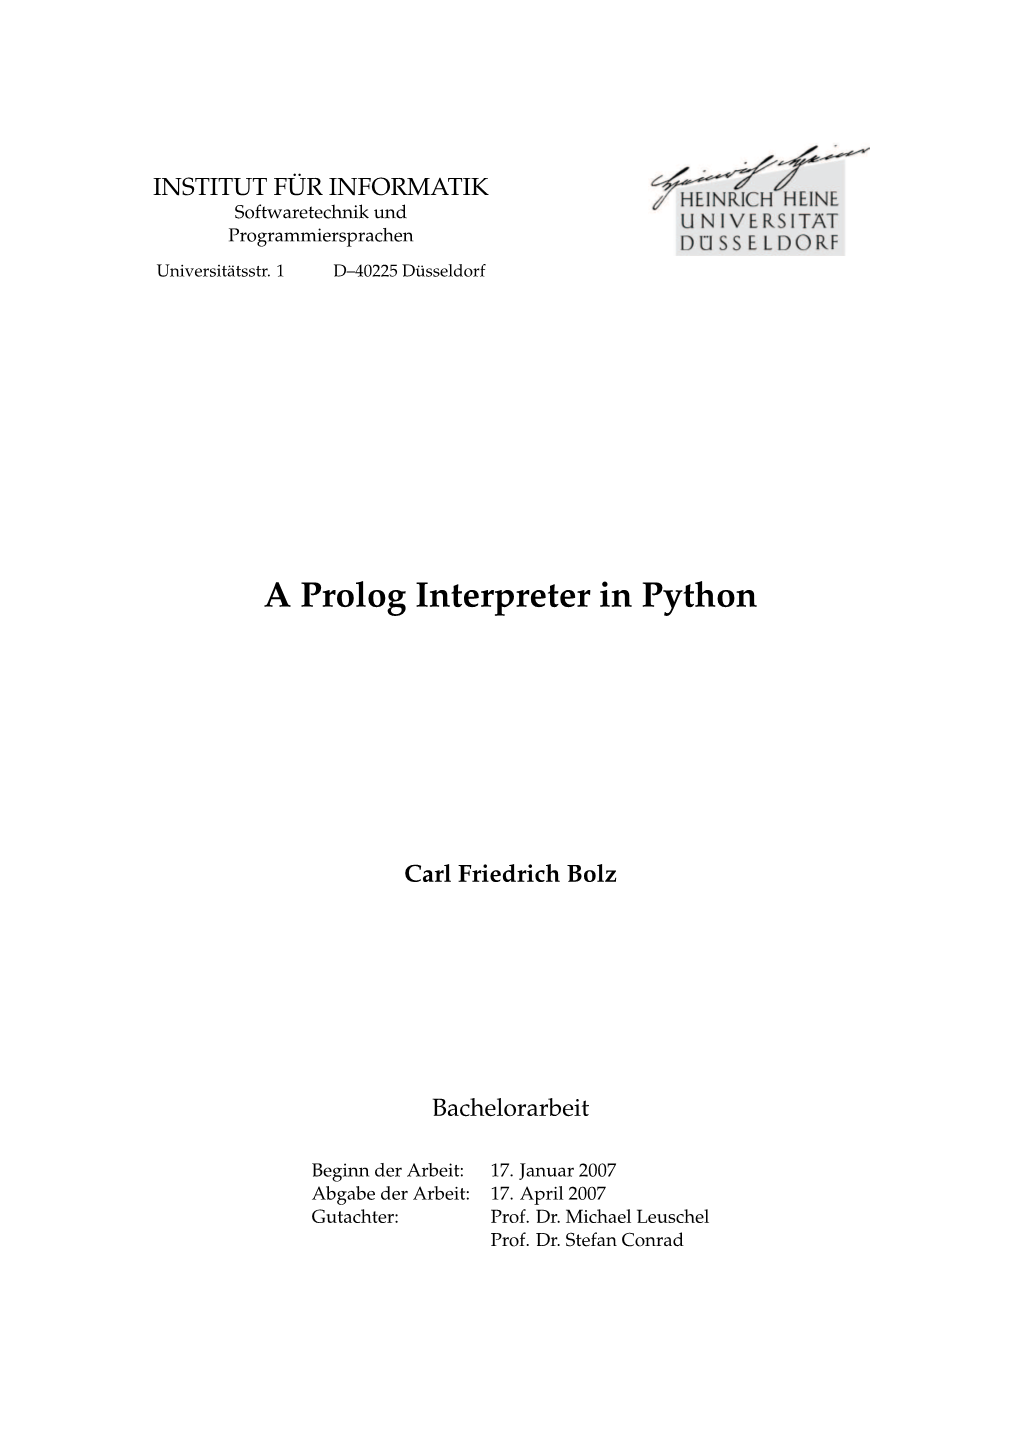 A Prolog Interpreter in Python